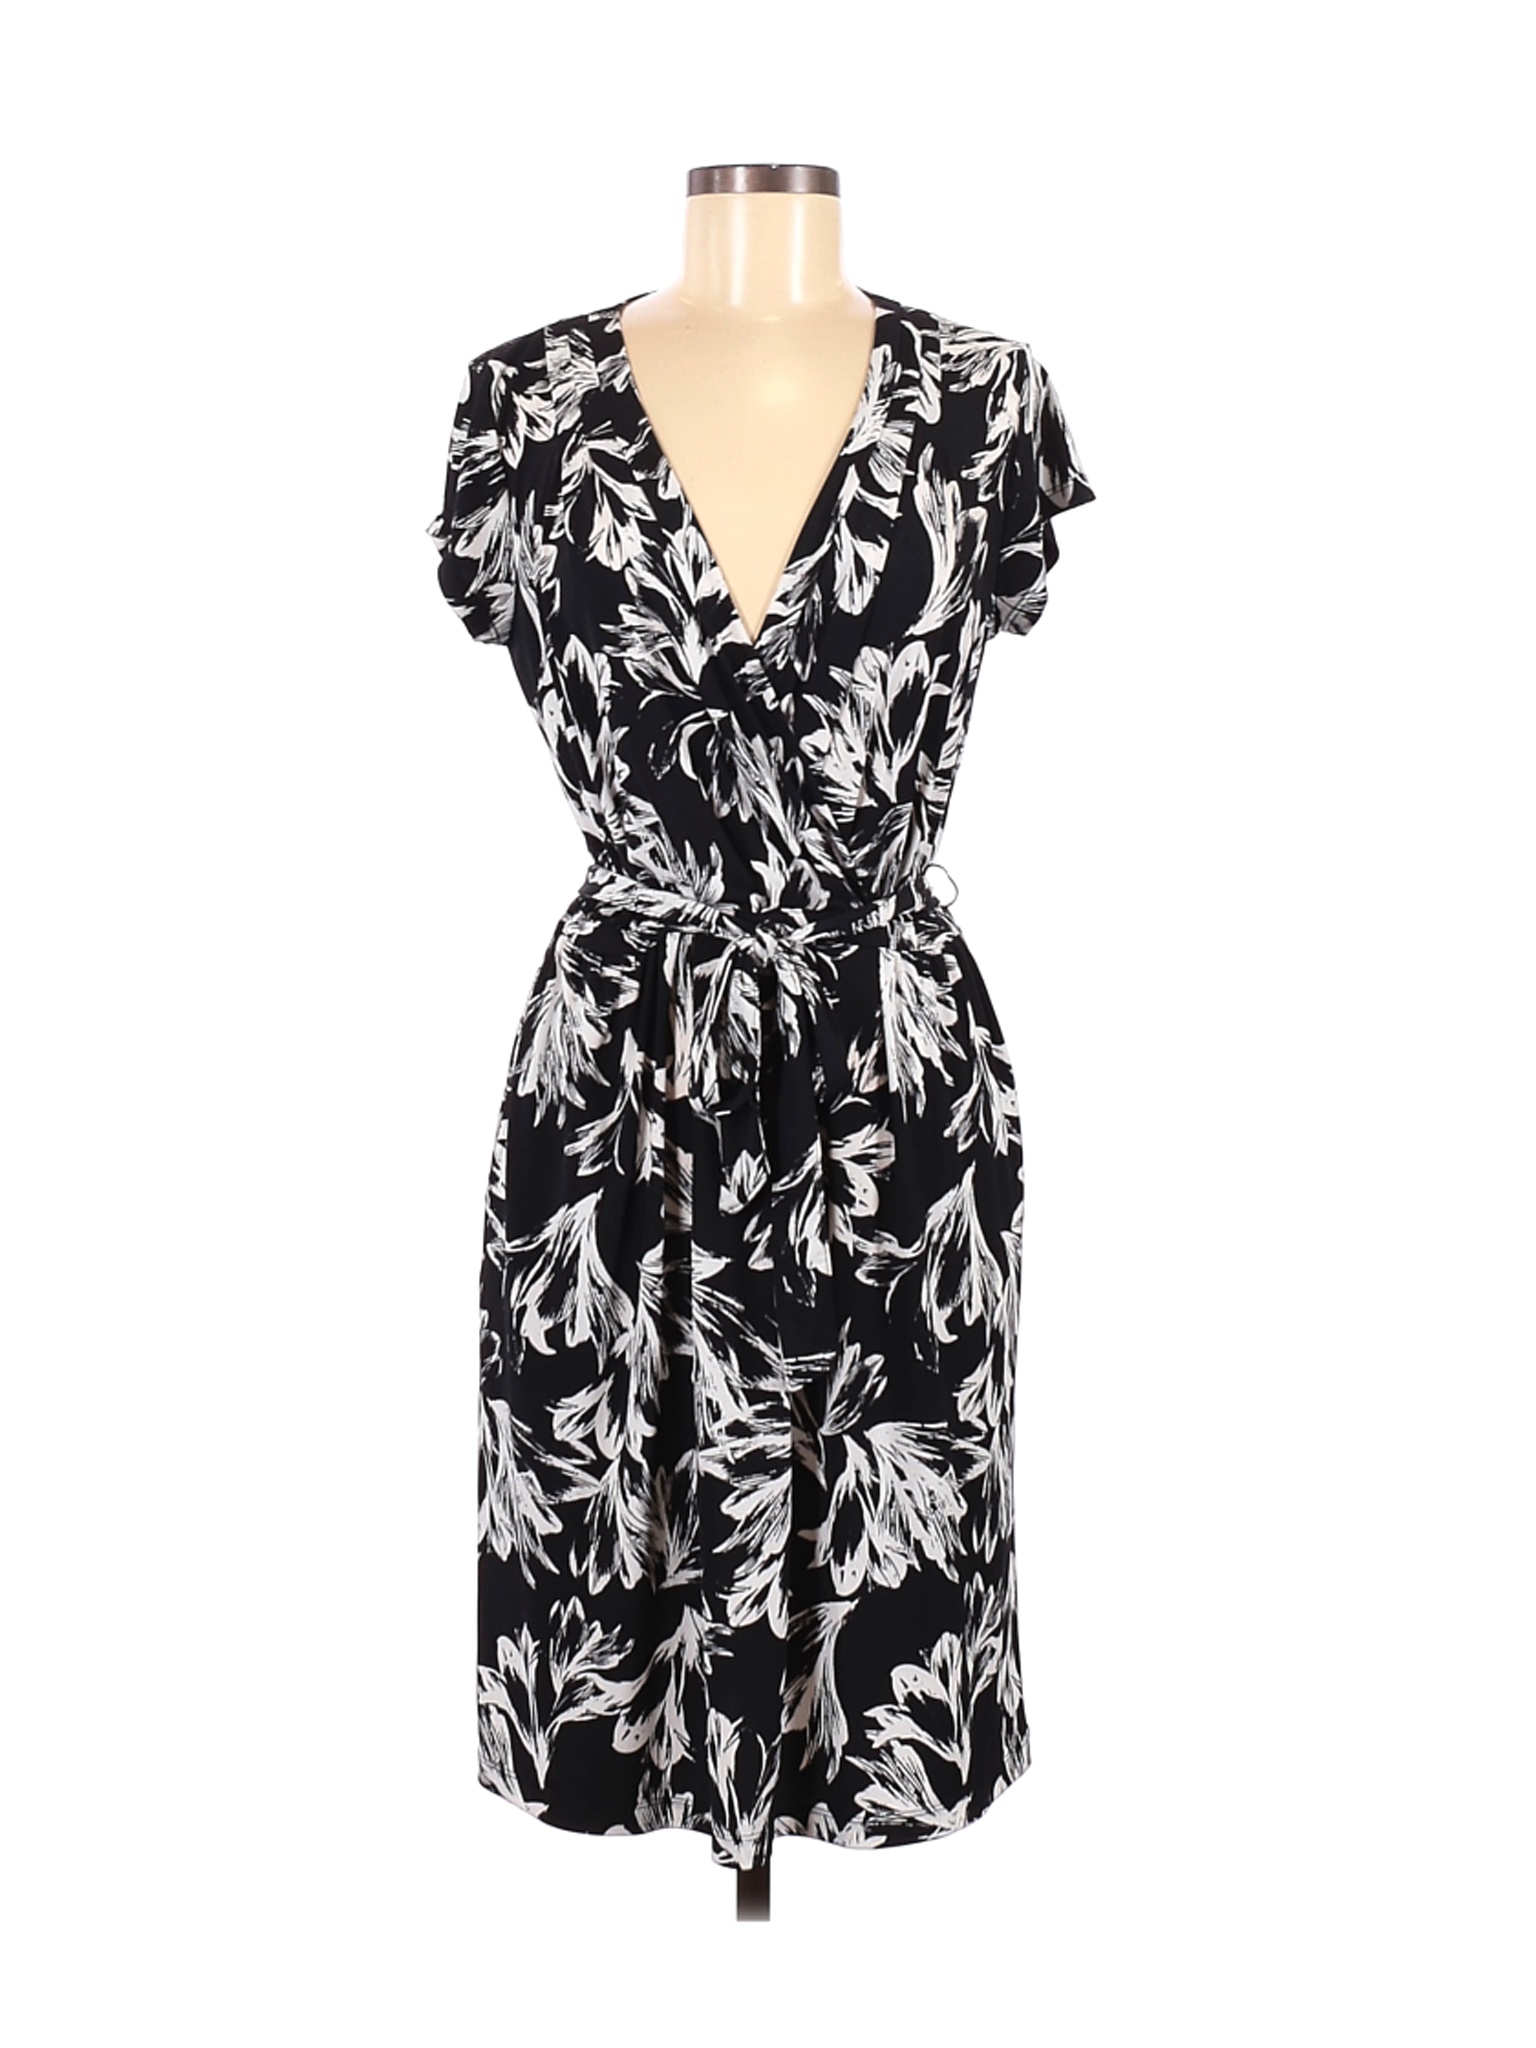 Banana Republic Factory Store Women Black Casual Dress M | eBay